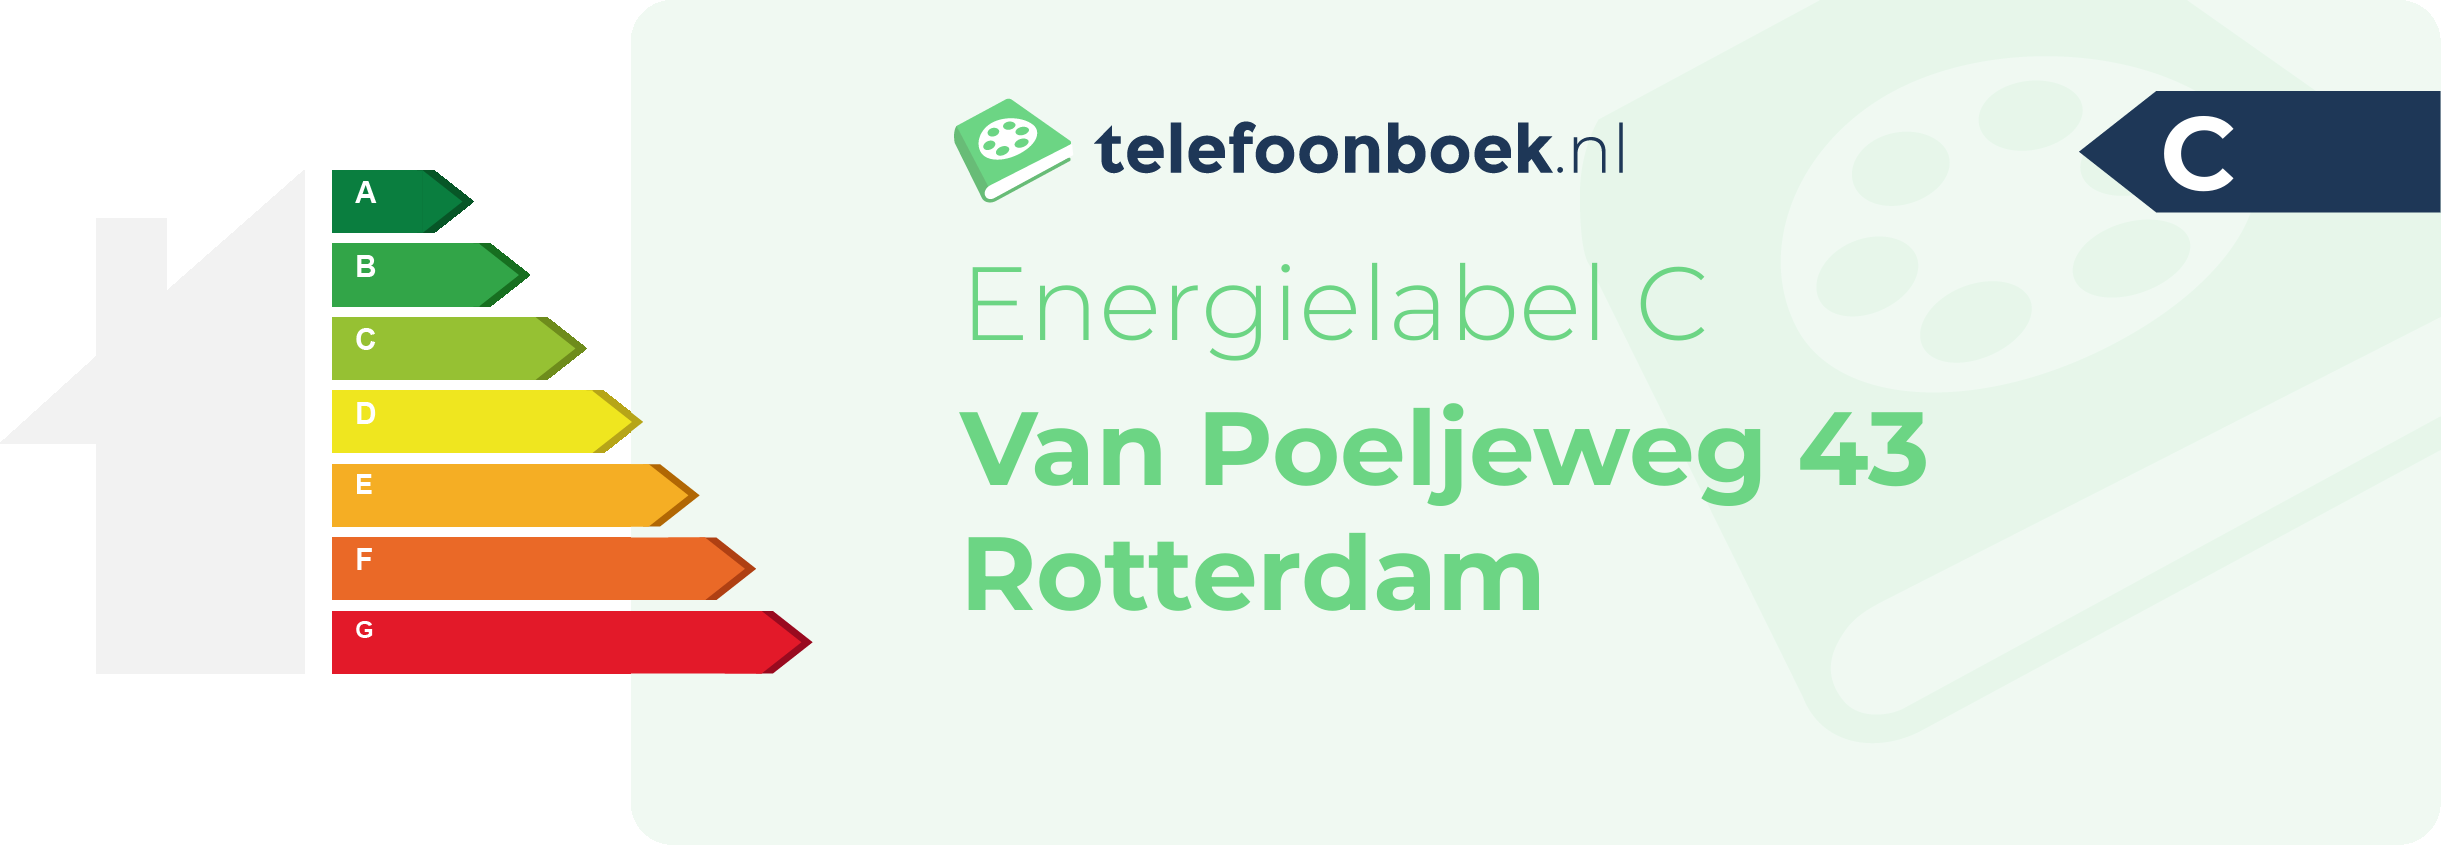 Energielabel Van Poeljeweg 43 Rotterdam